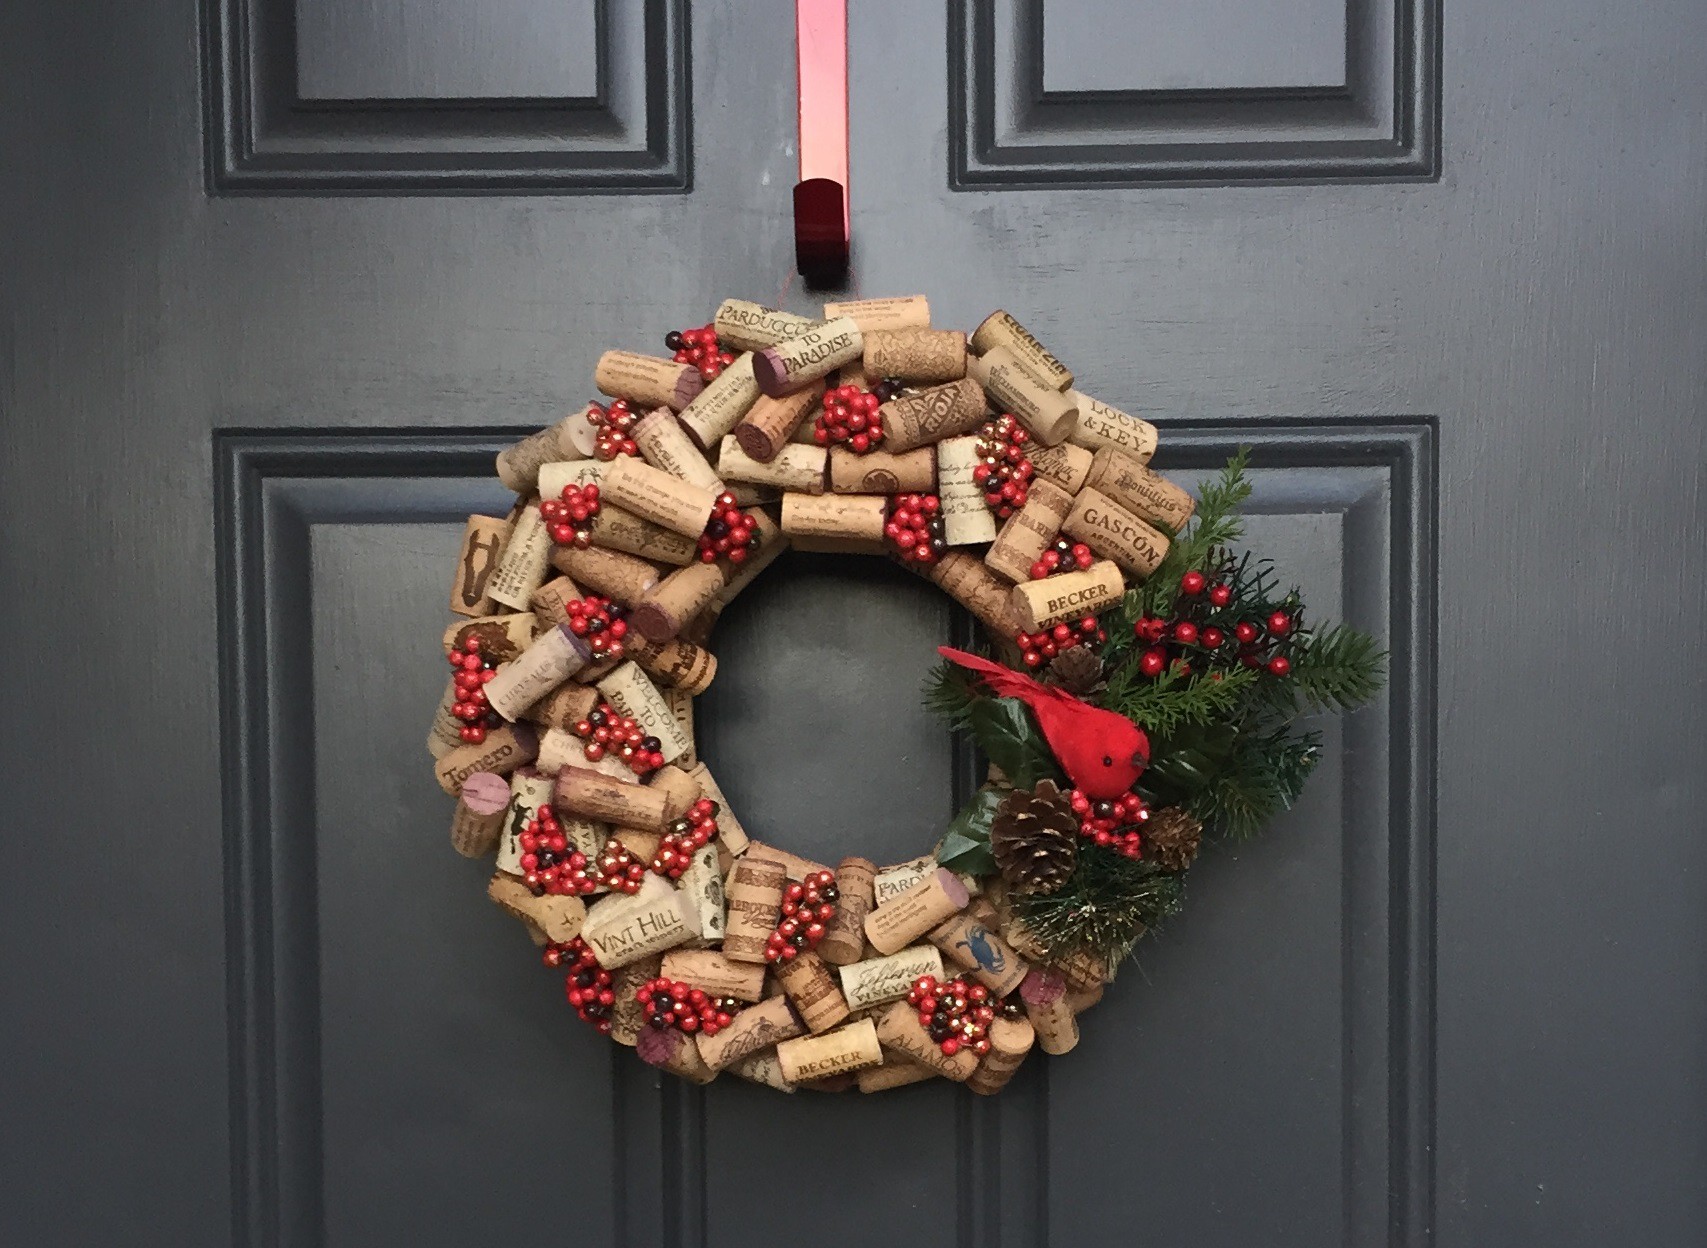 wine-cork-wreath-finished-up-close3-e1416925200890.jpg